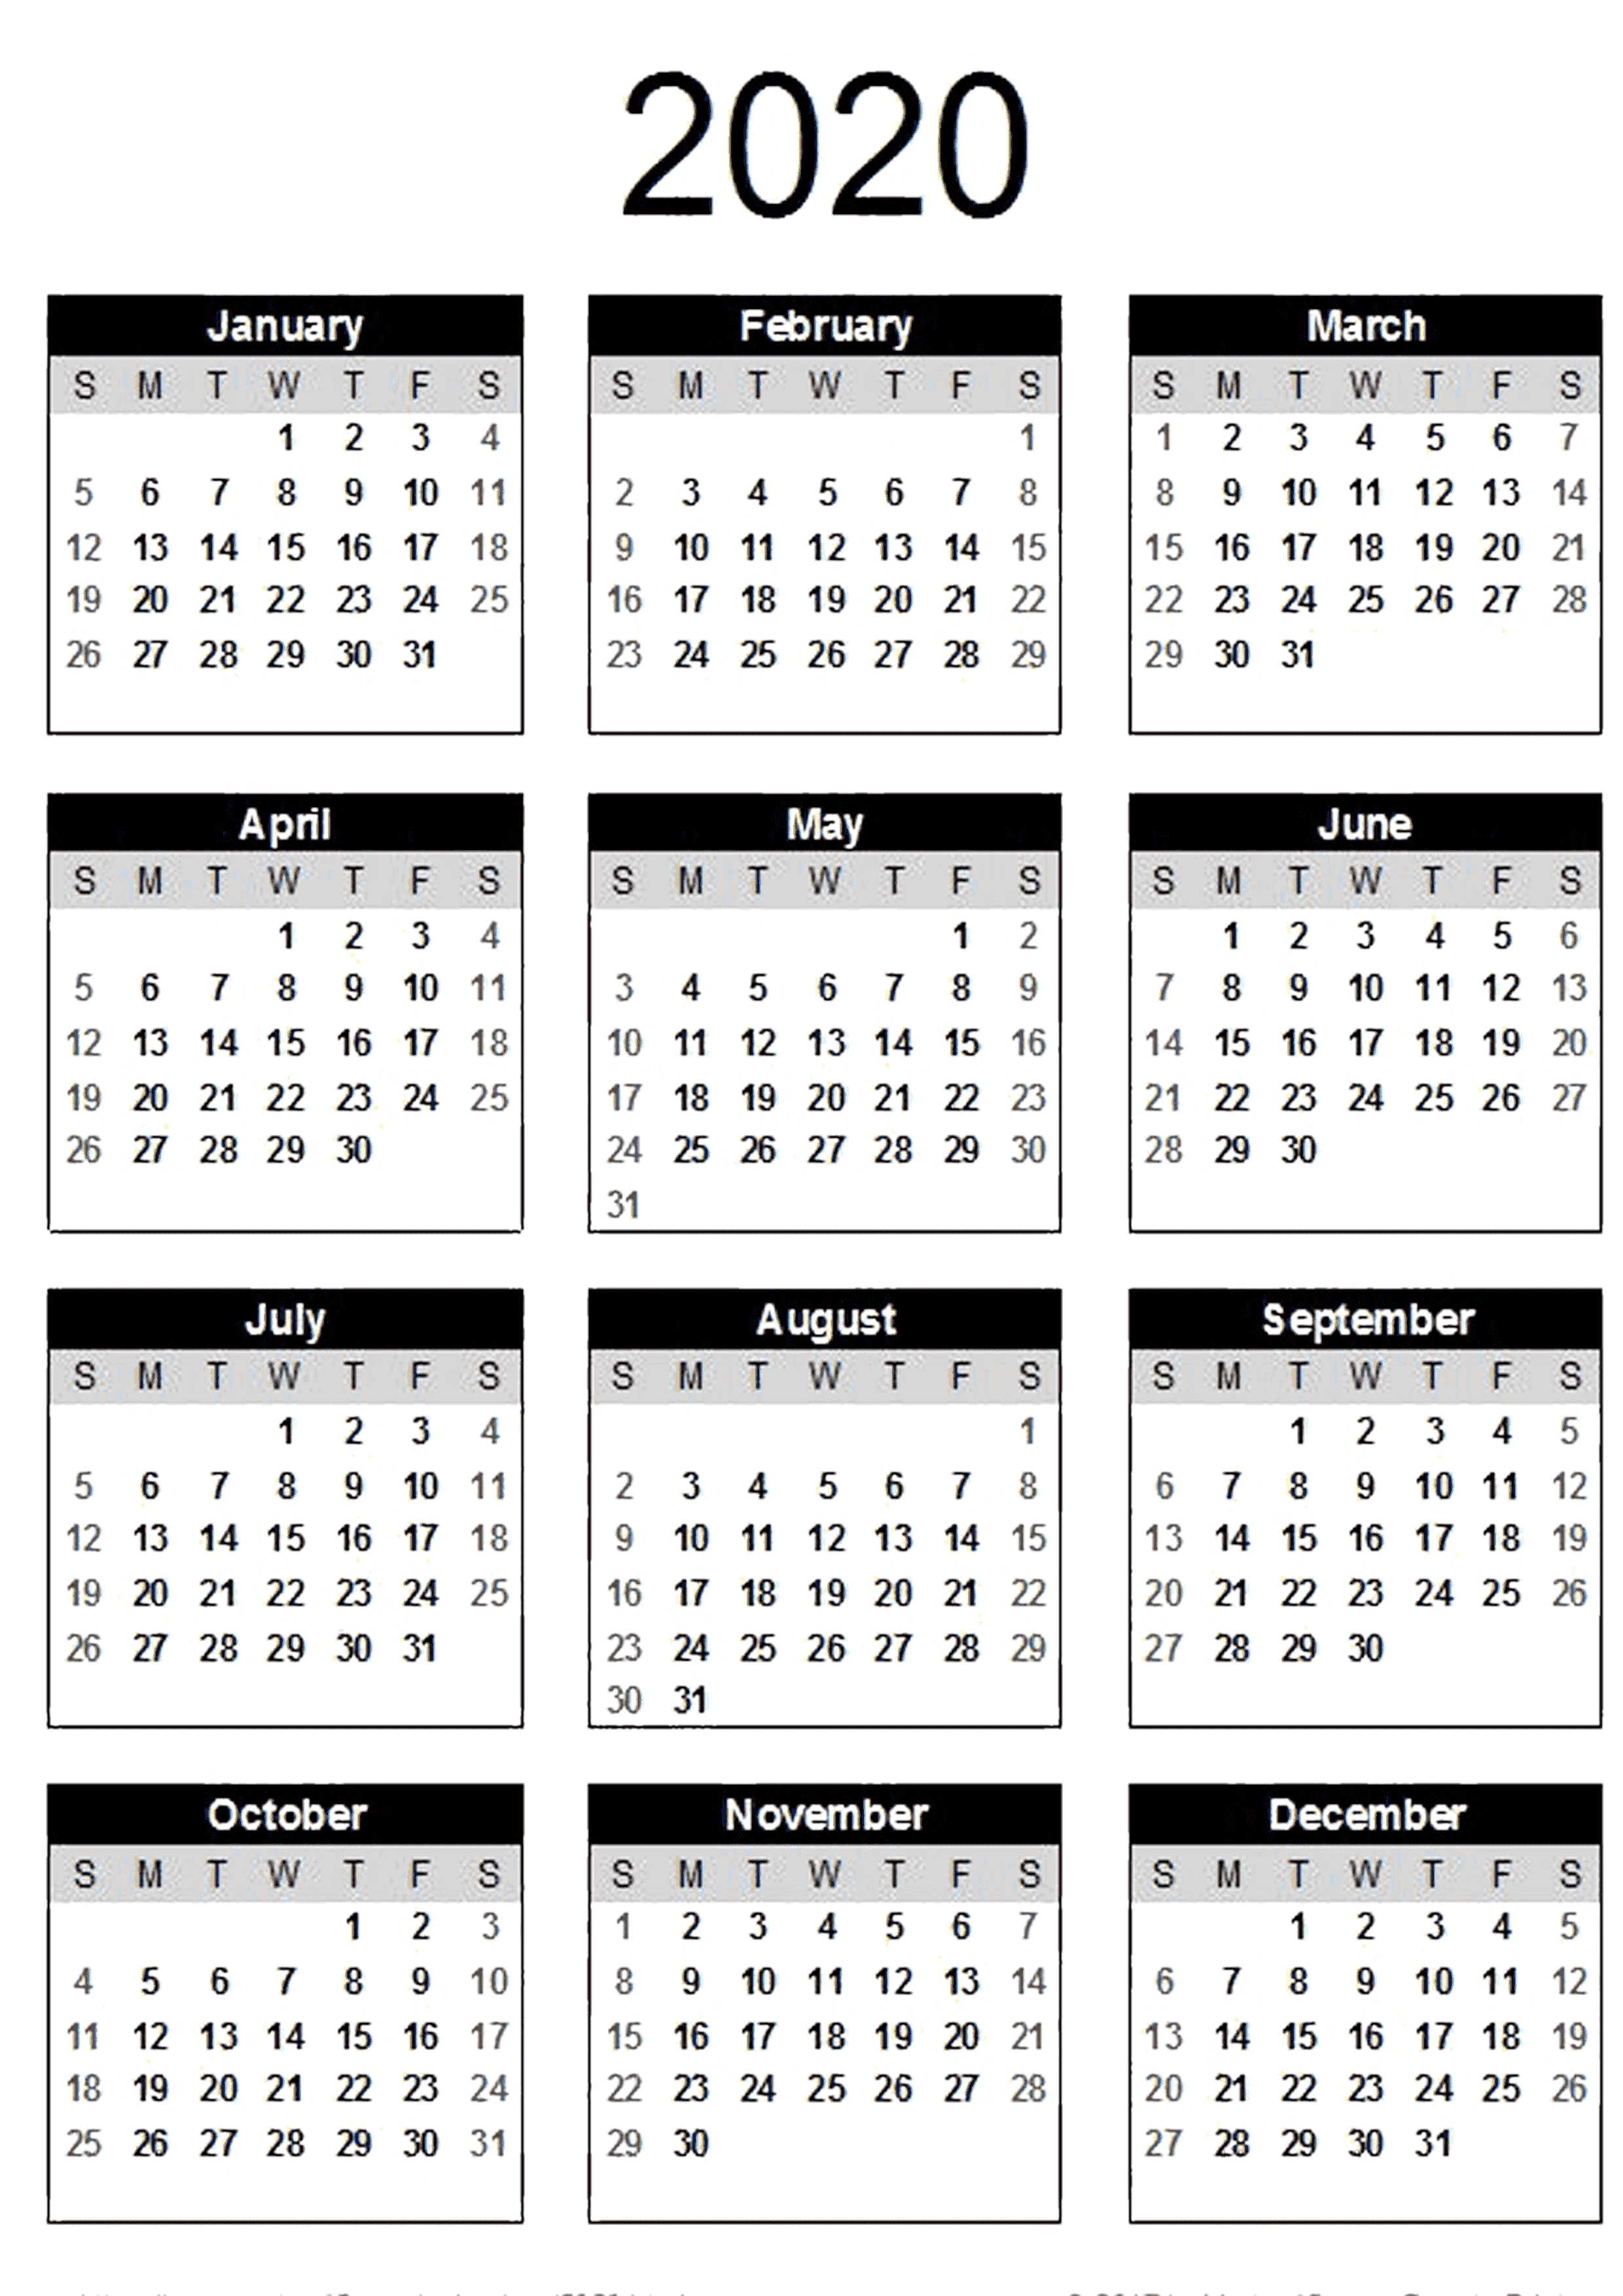 Print Calendar Outlook 2020 Calendar Printables Free Templates